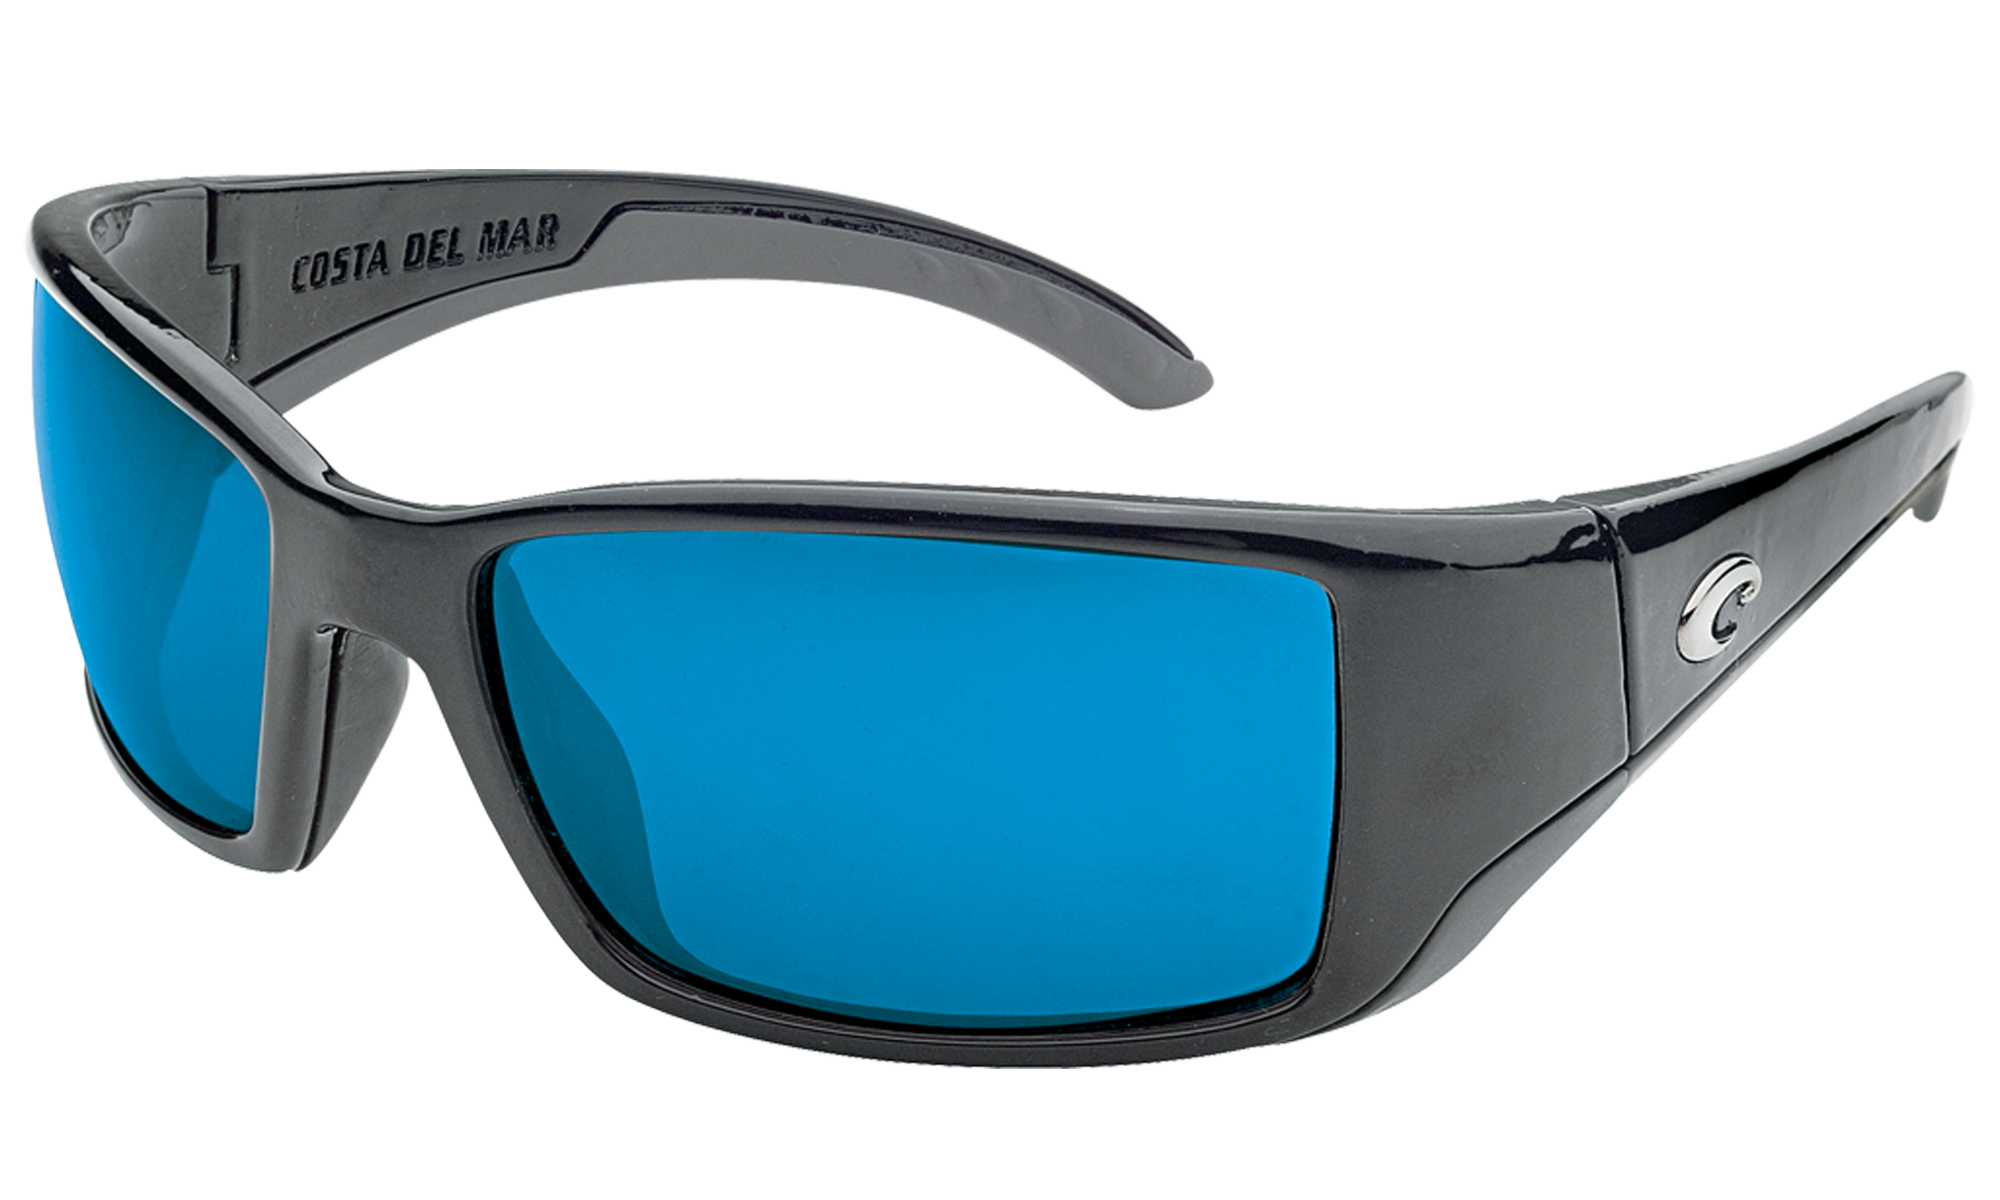 Costa Del Mar Blackfin 580G Glass Polarized Sunglasses - Shiny Black/Blue Mirror - Large